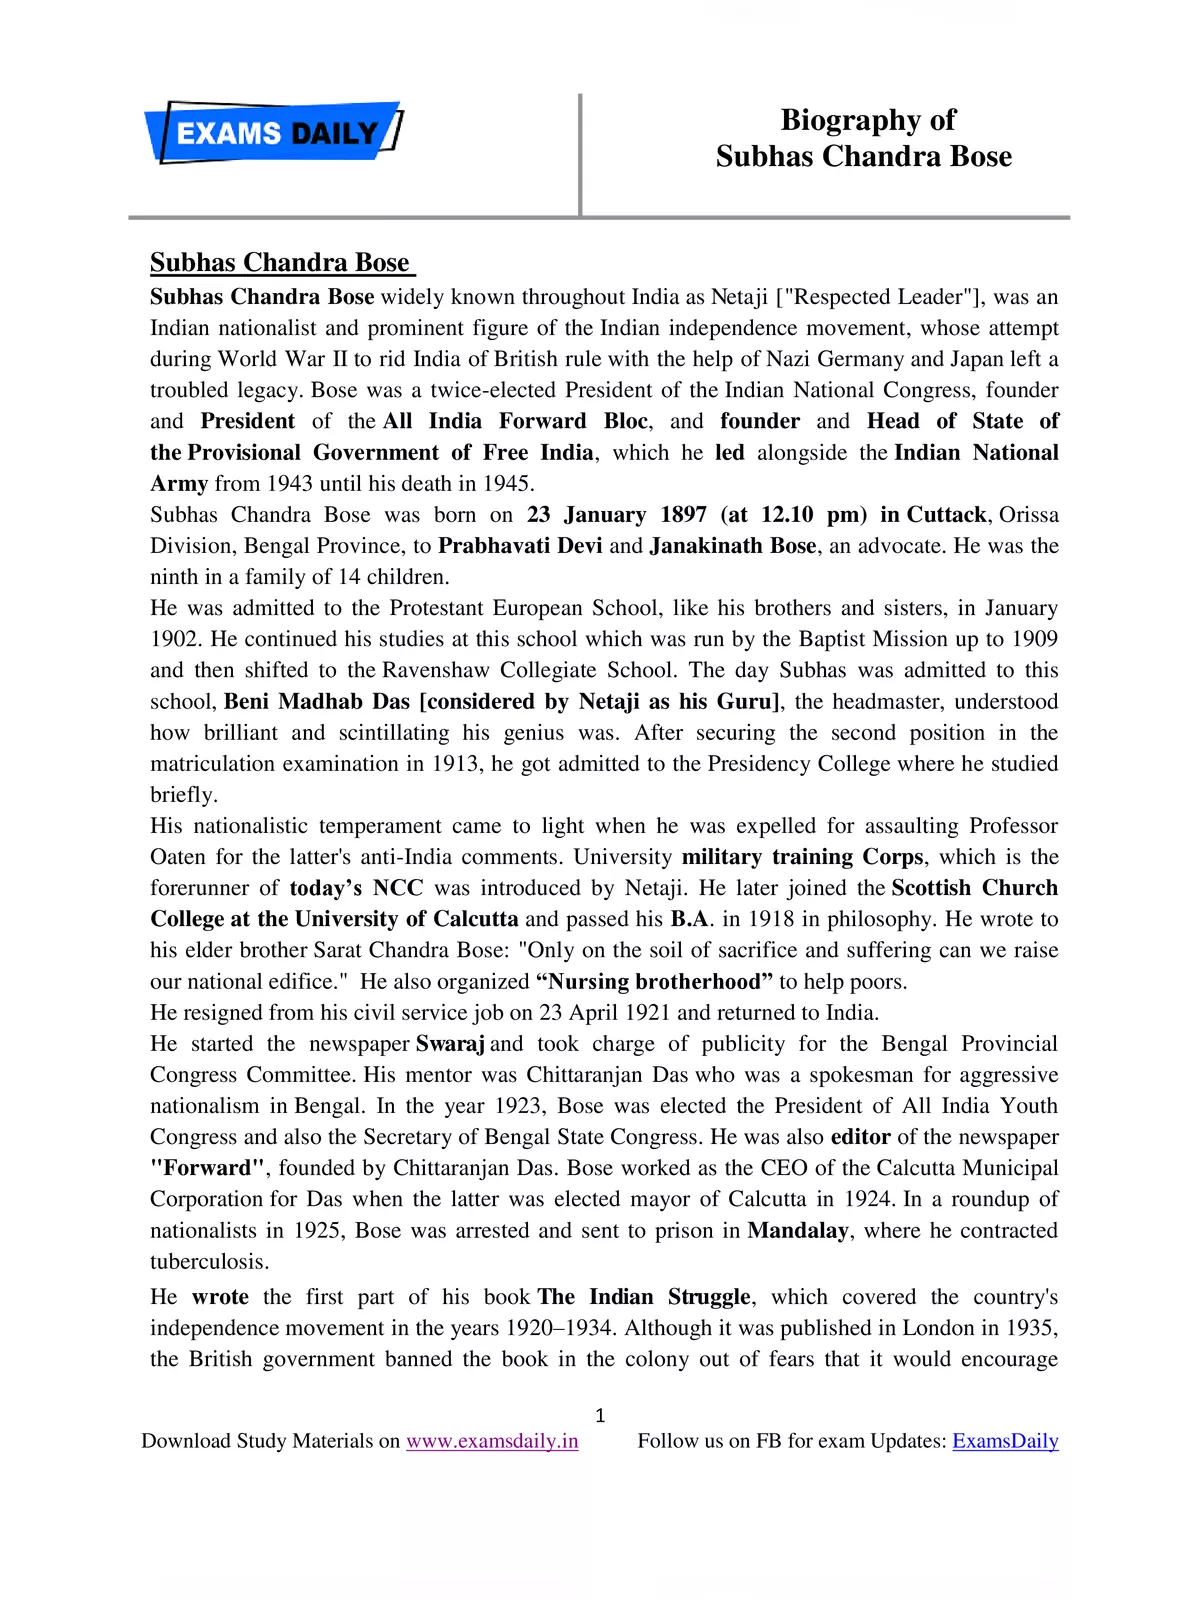 Subhash Chandra Bose Biography English